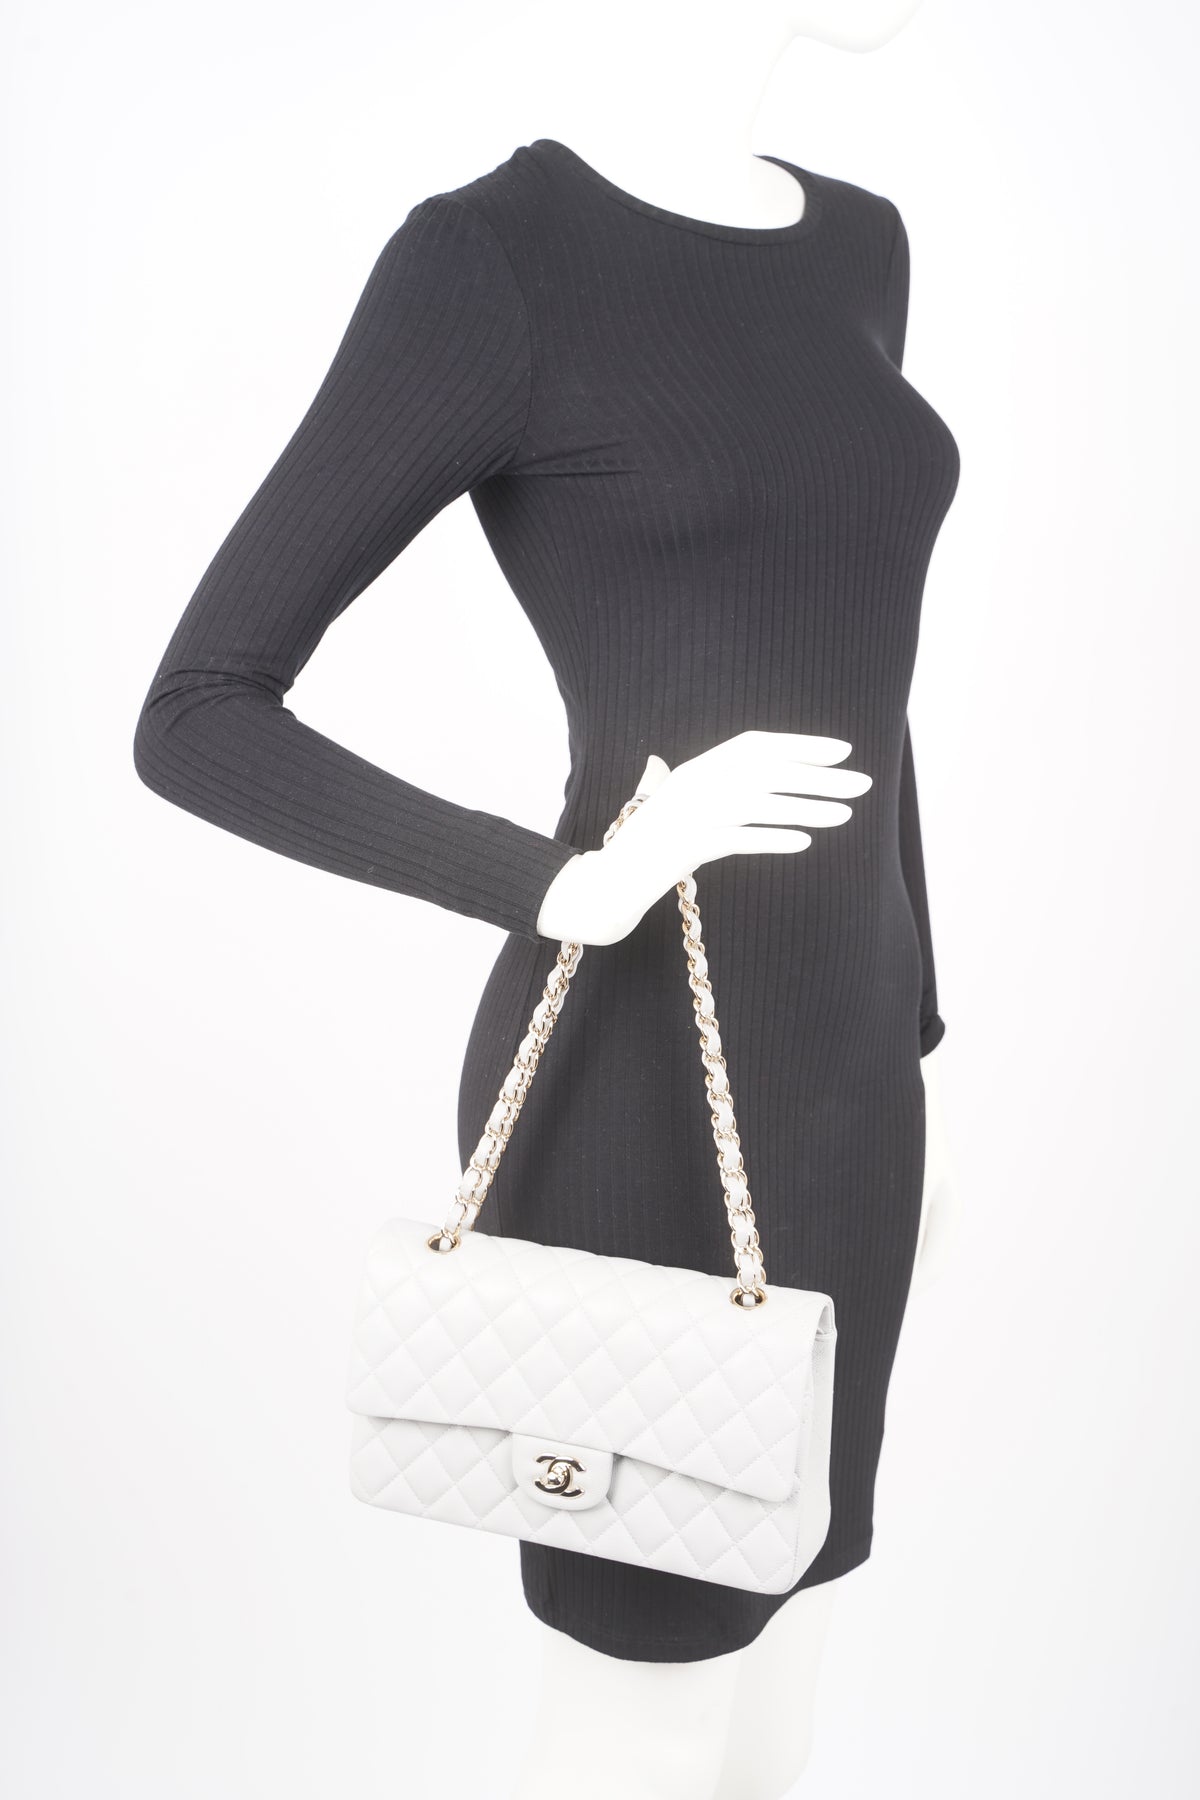 Chanel classic flap bag chain shoulder bags gold color 25cm medium